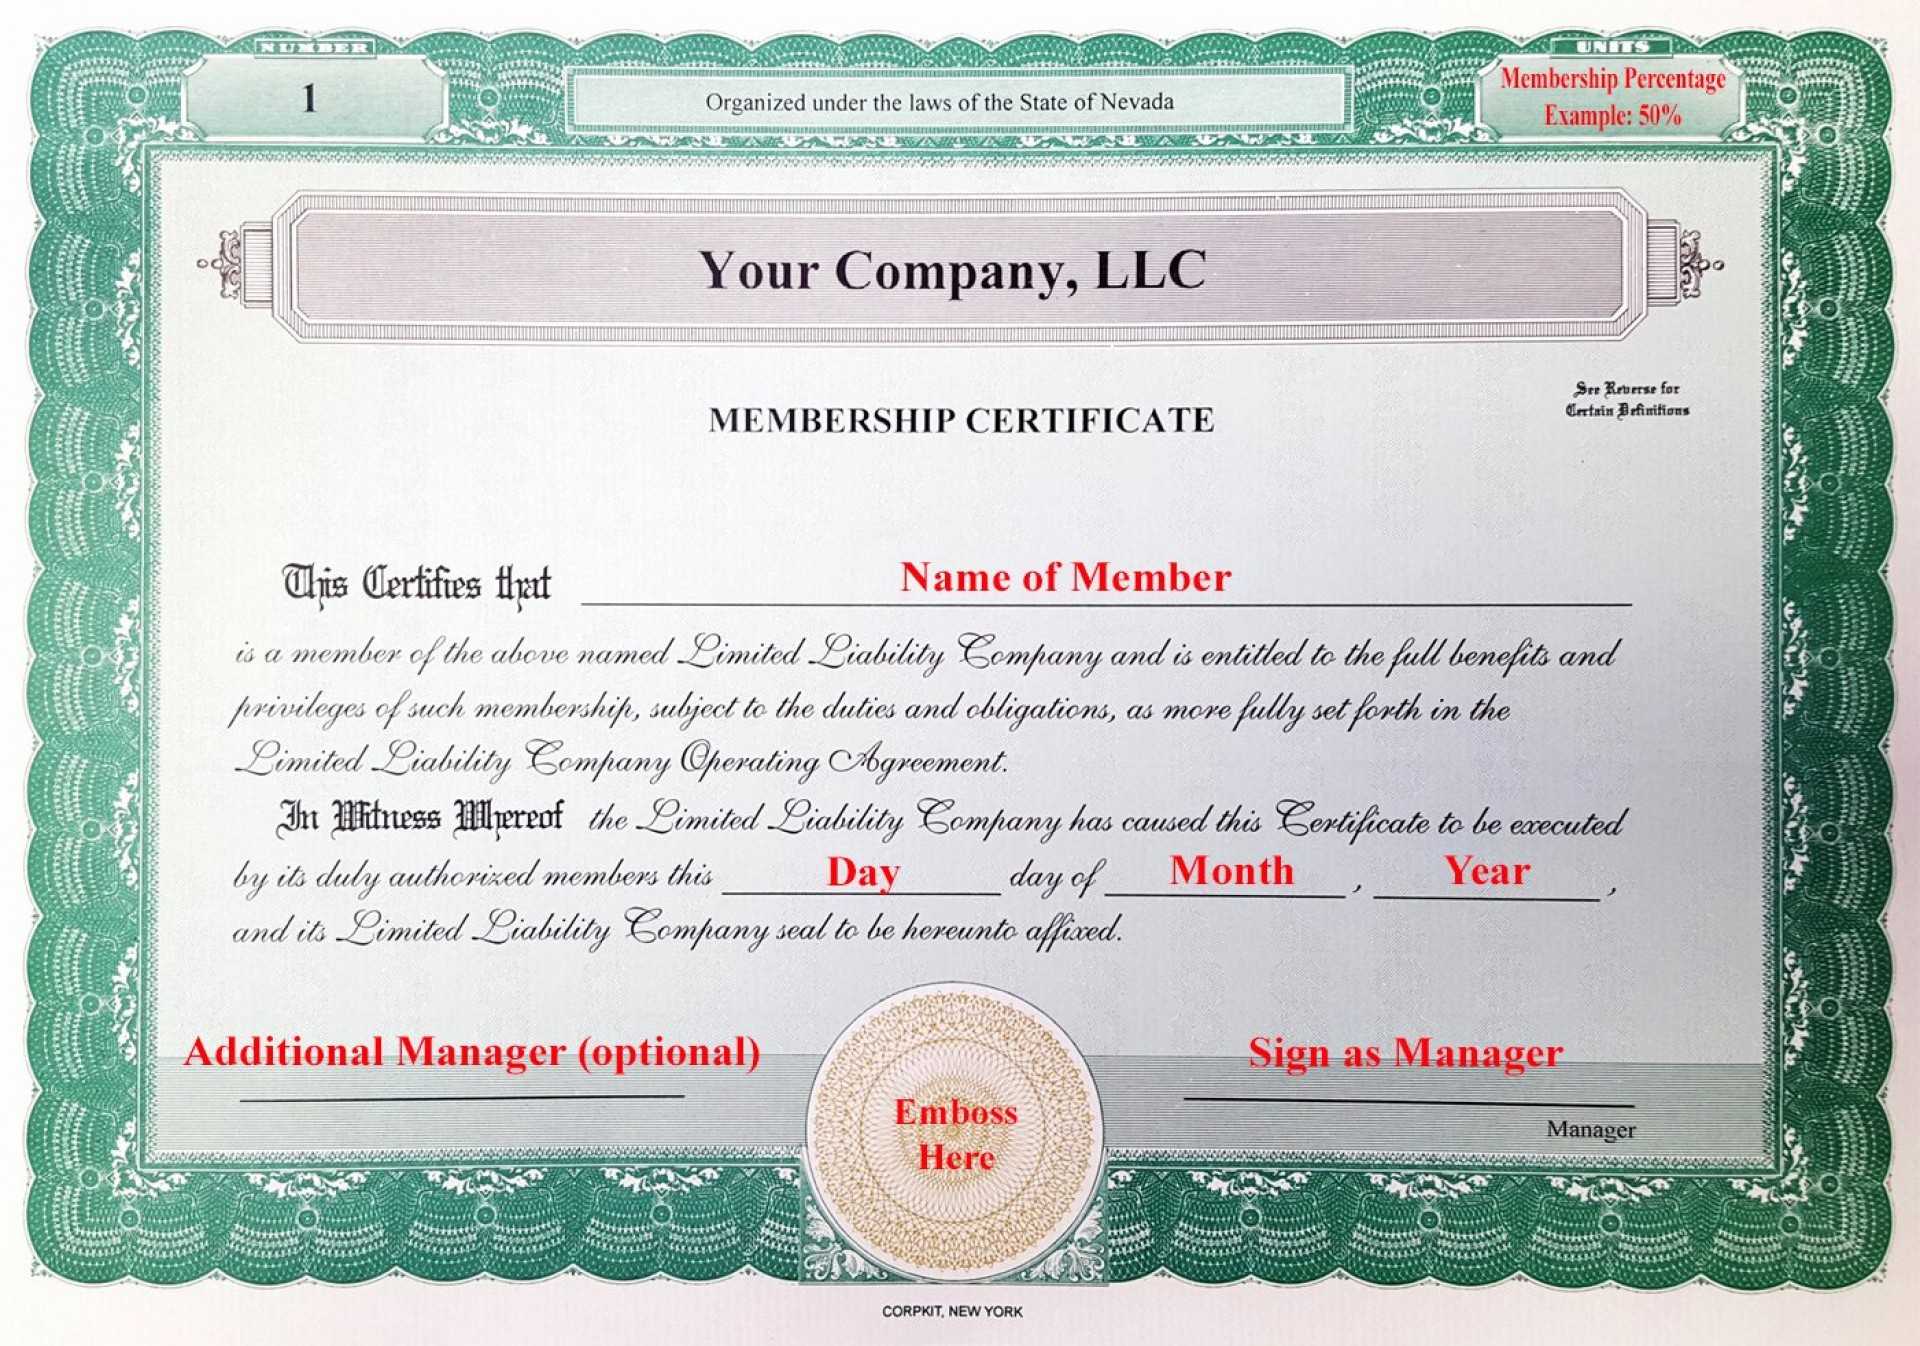 004 Llcship Certificate Template Best Of Laughlin Associates Pertaining To Llc Membership Certificate Template